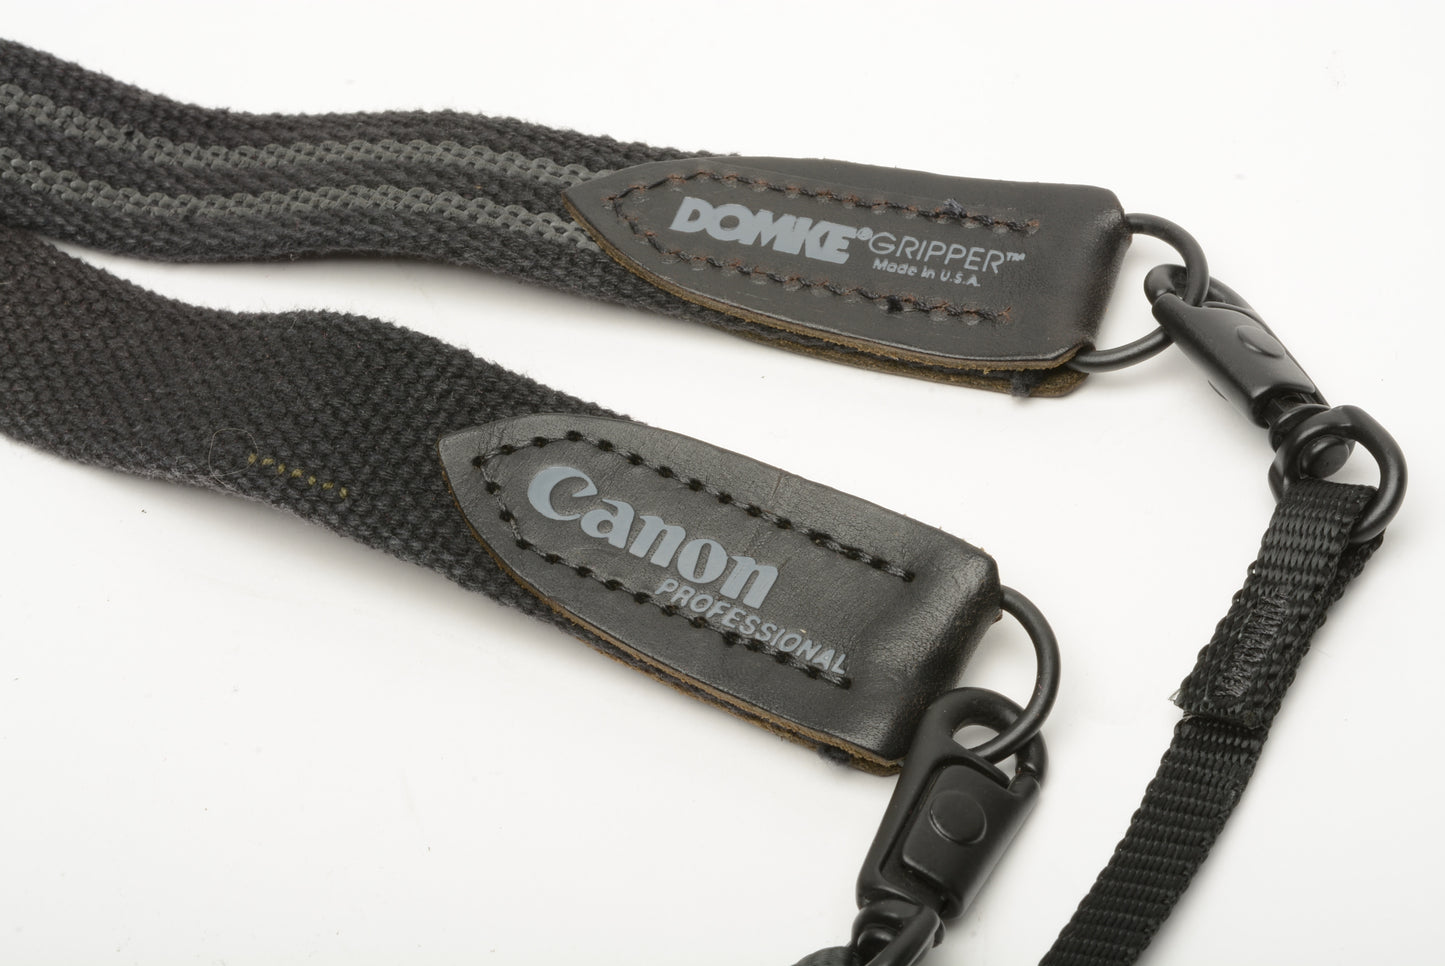 Domke 1" gripper strap - Genuine - Original - Very clean, w/metal clips